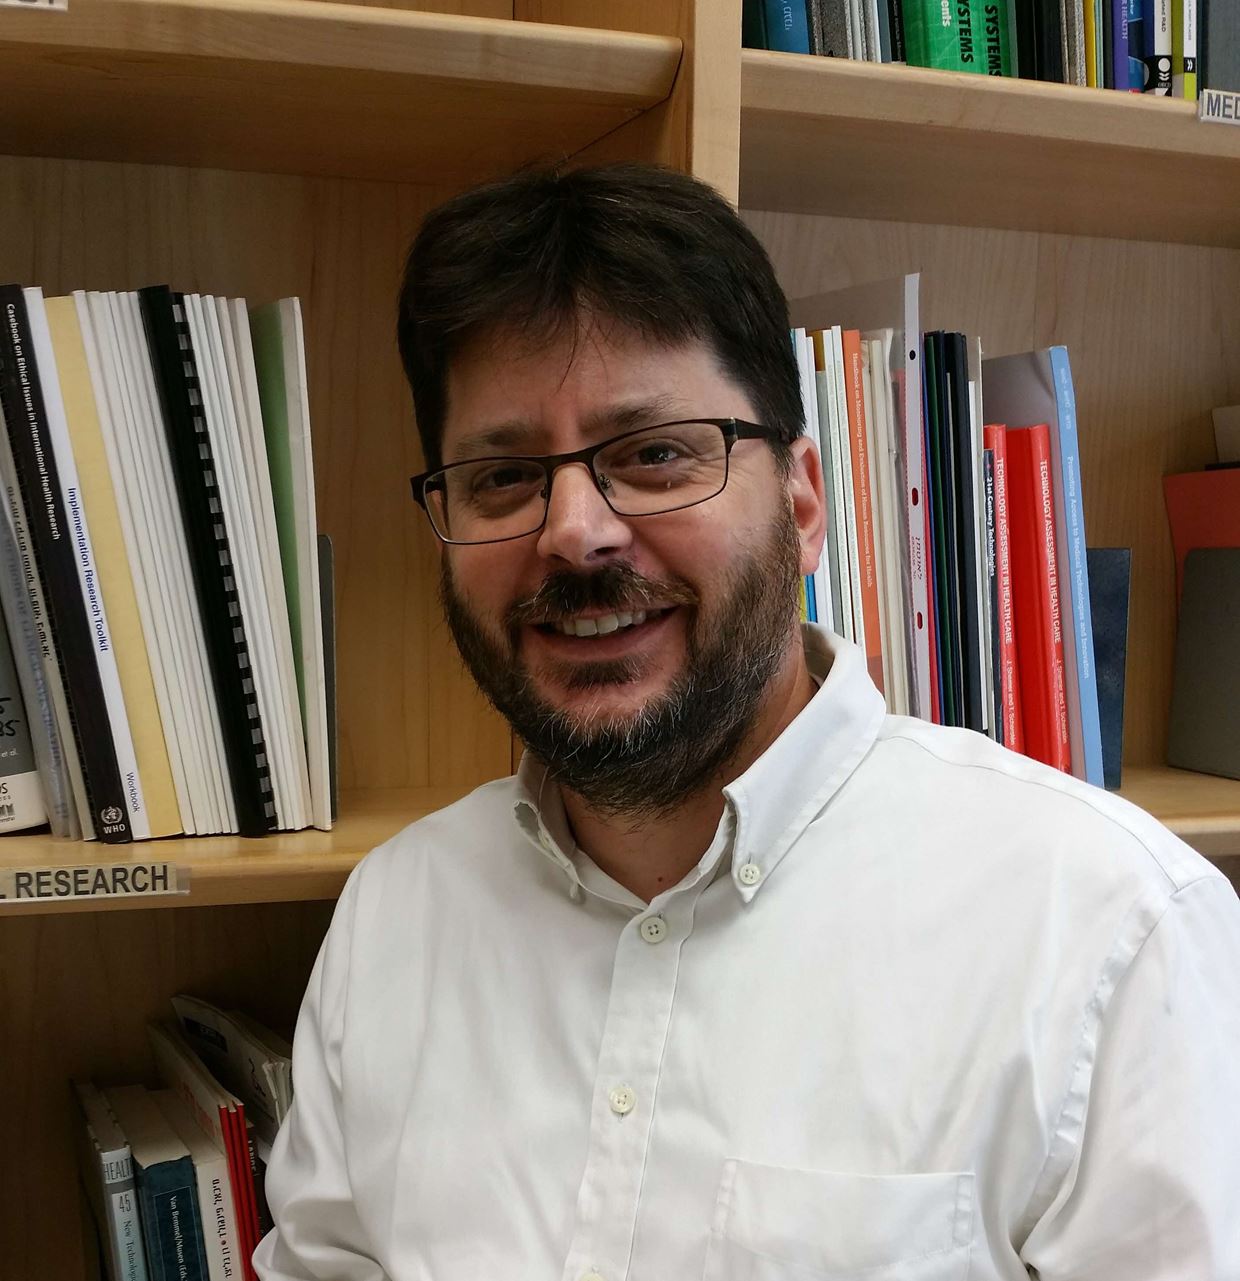 Dr. Ahmi Ben-Yehudah